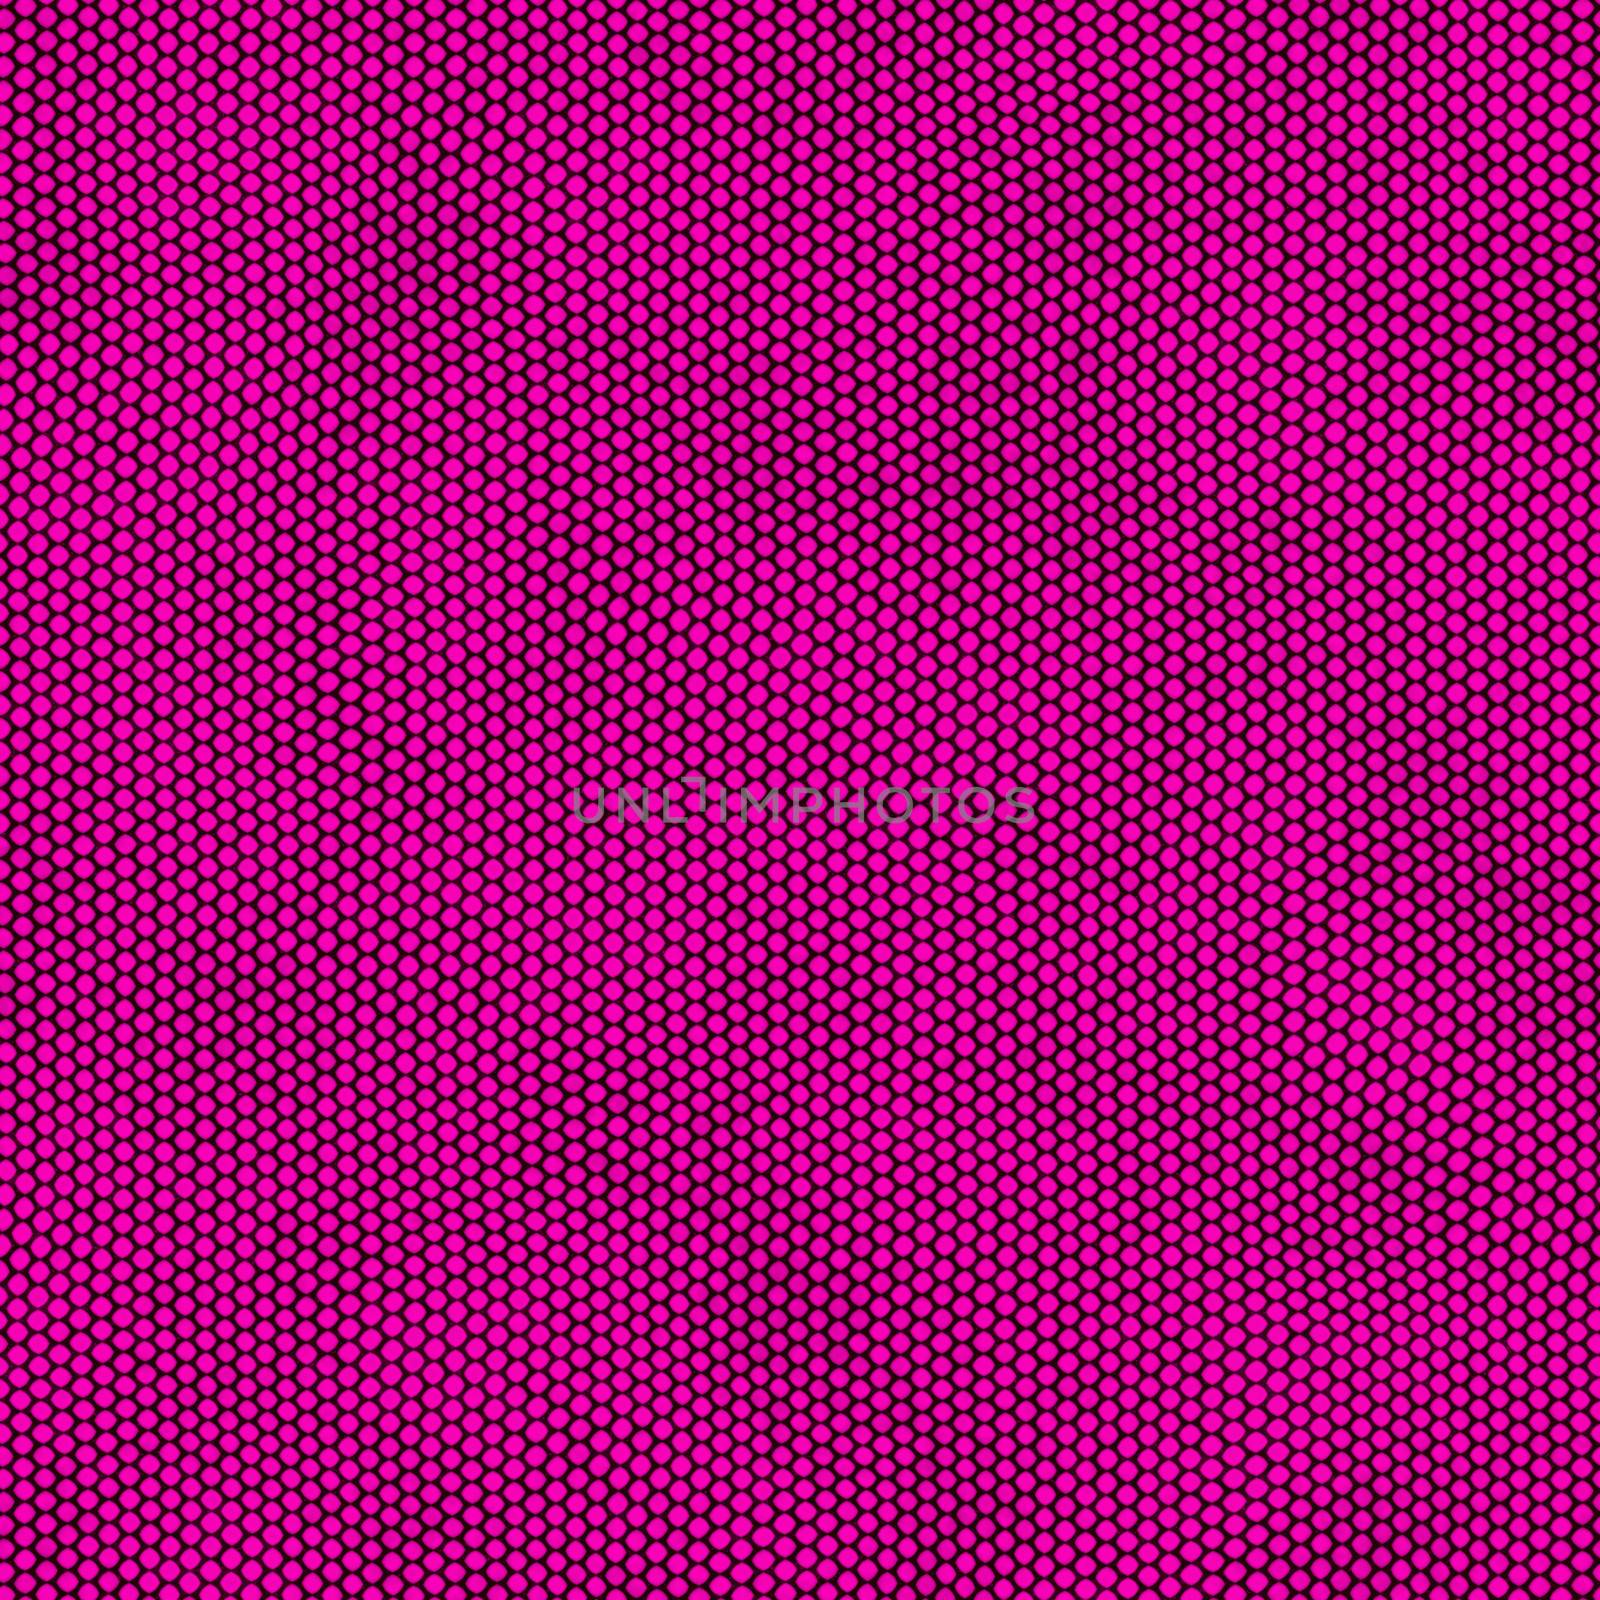 purple seamless halftone dot pattern background by sfinks